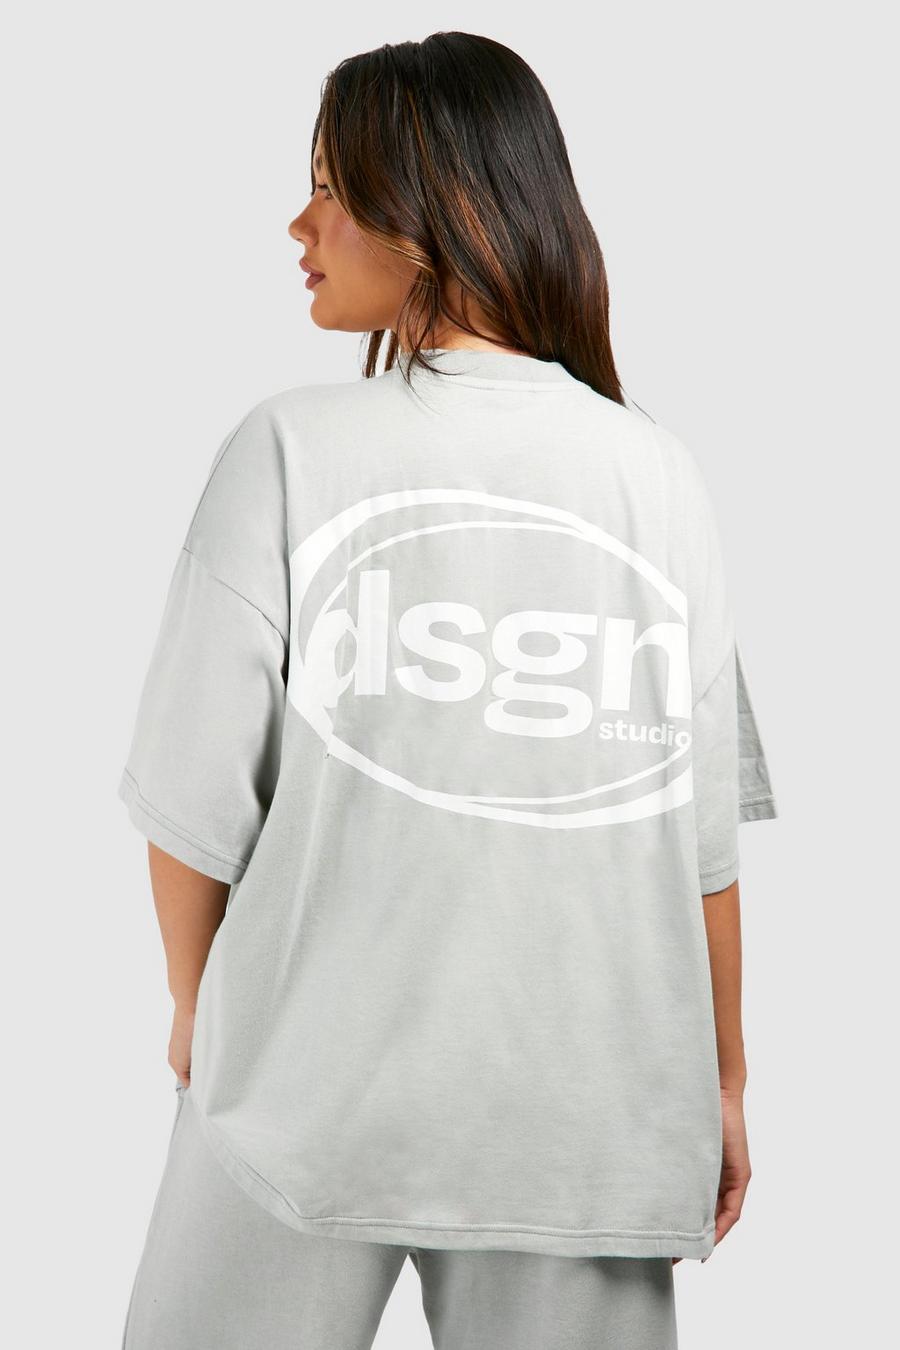 Camiseta oversize con estampado Dsgn Studio, Ice grey